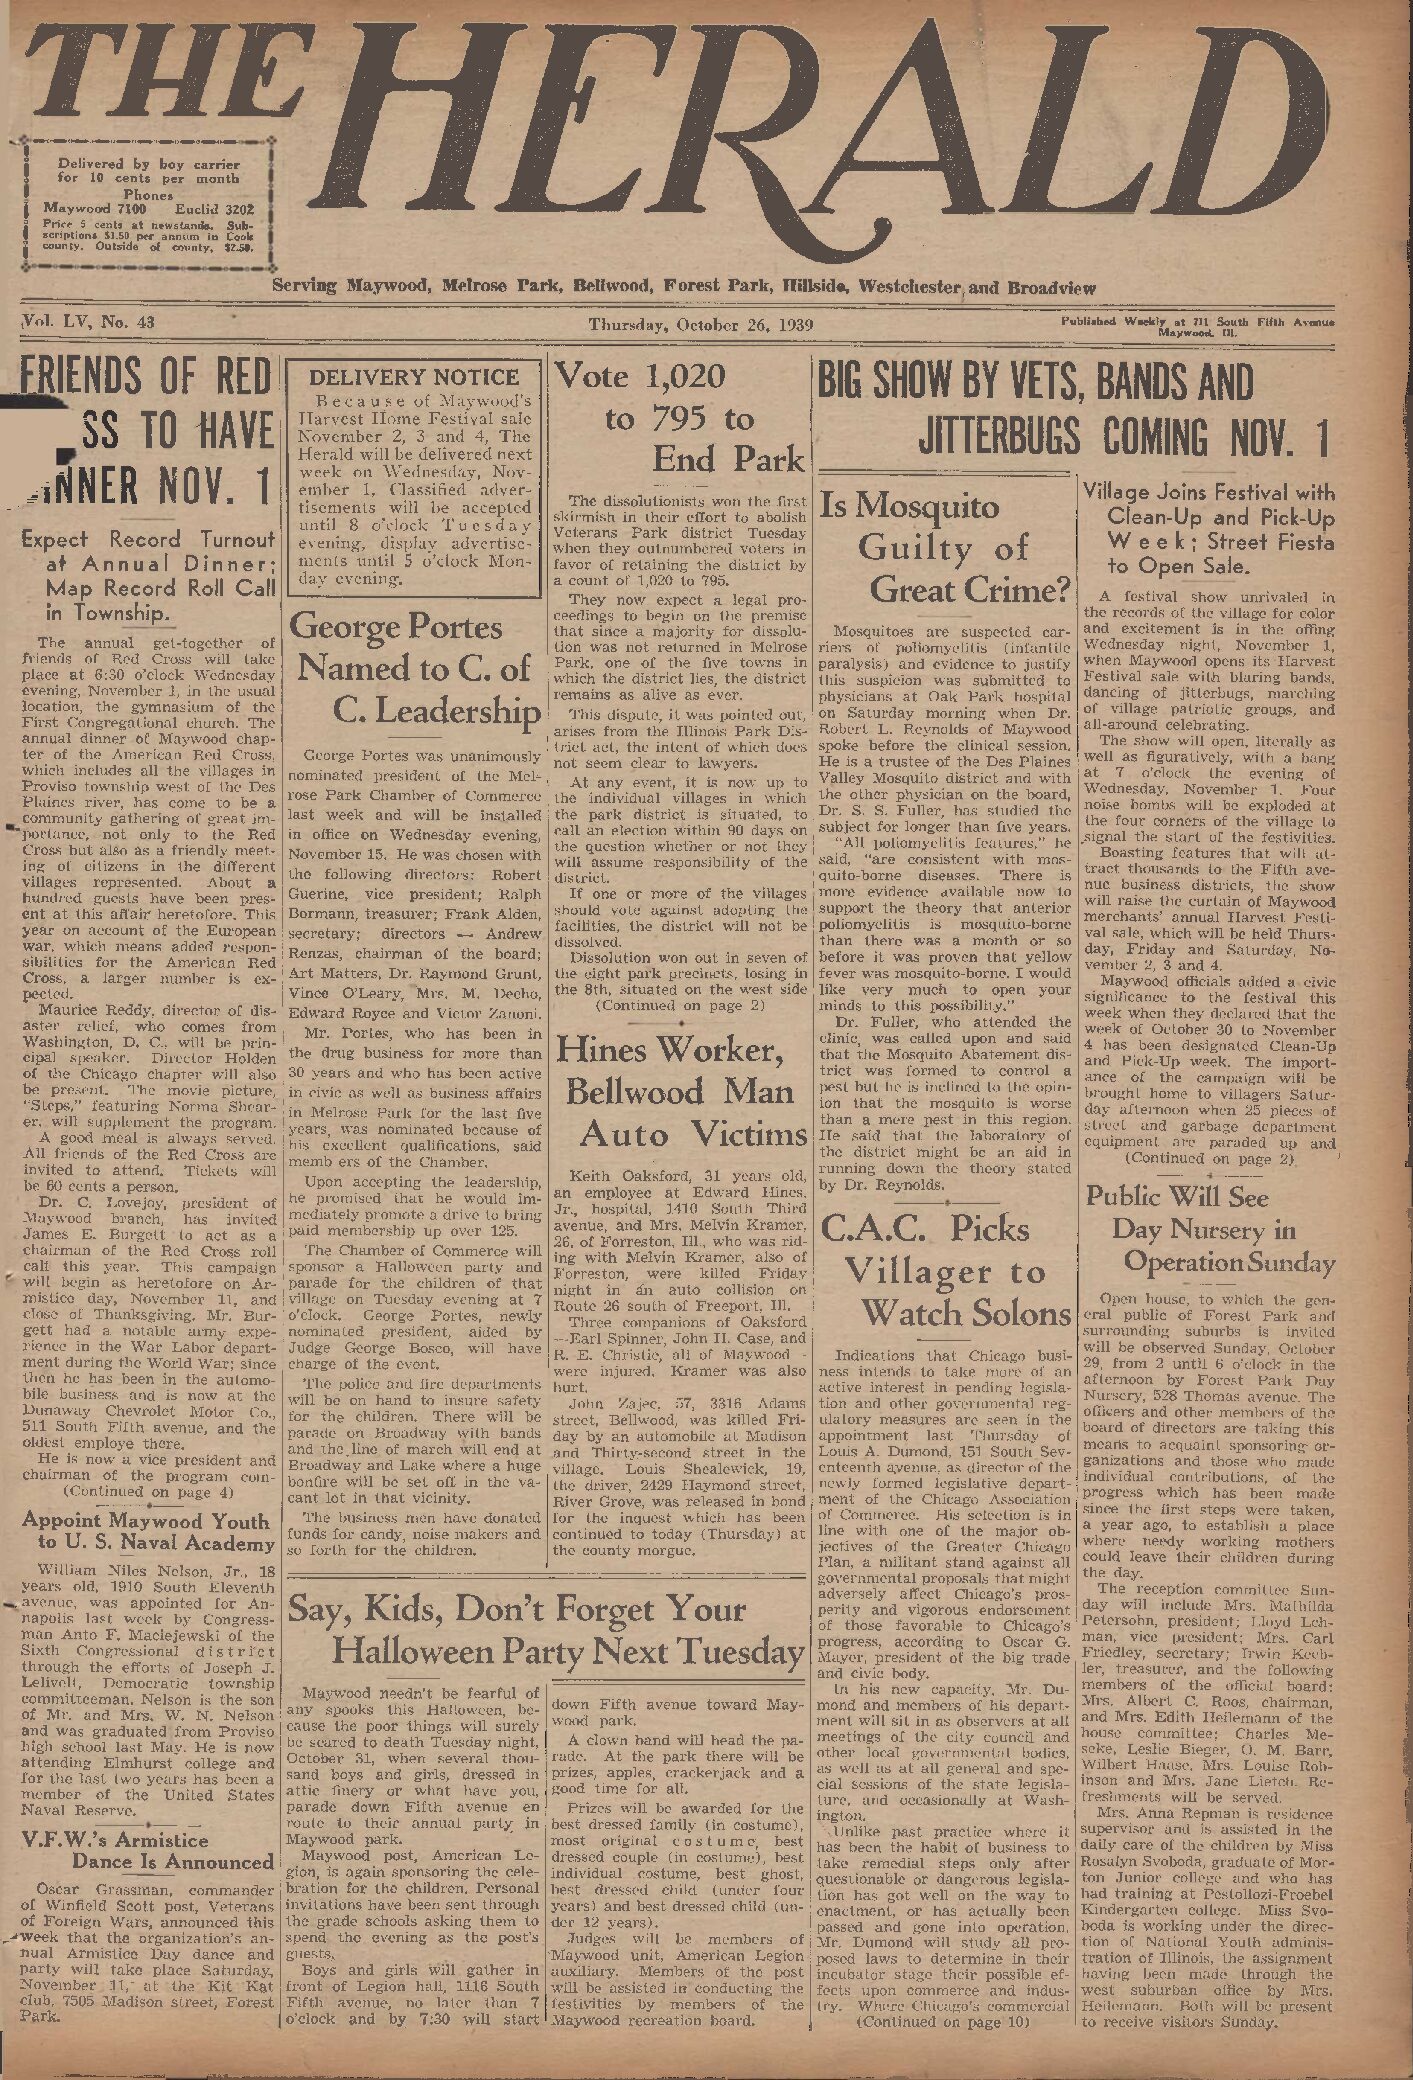 The Herald – 19391026